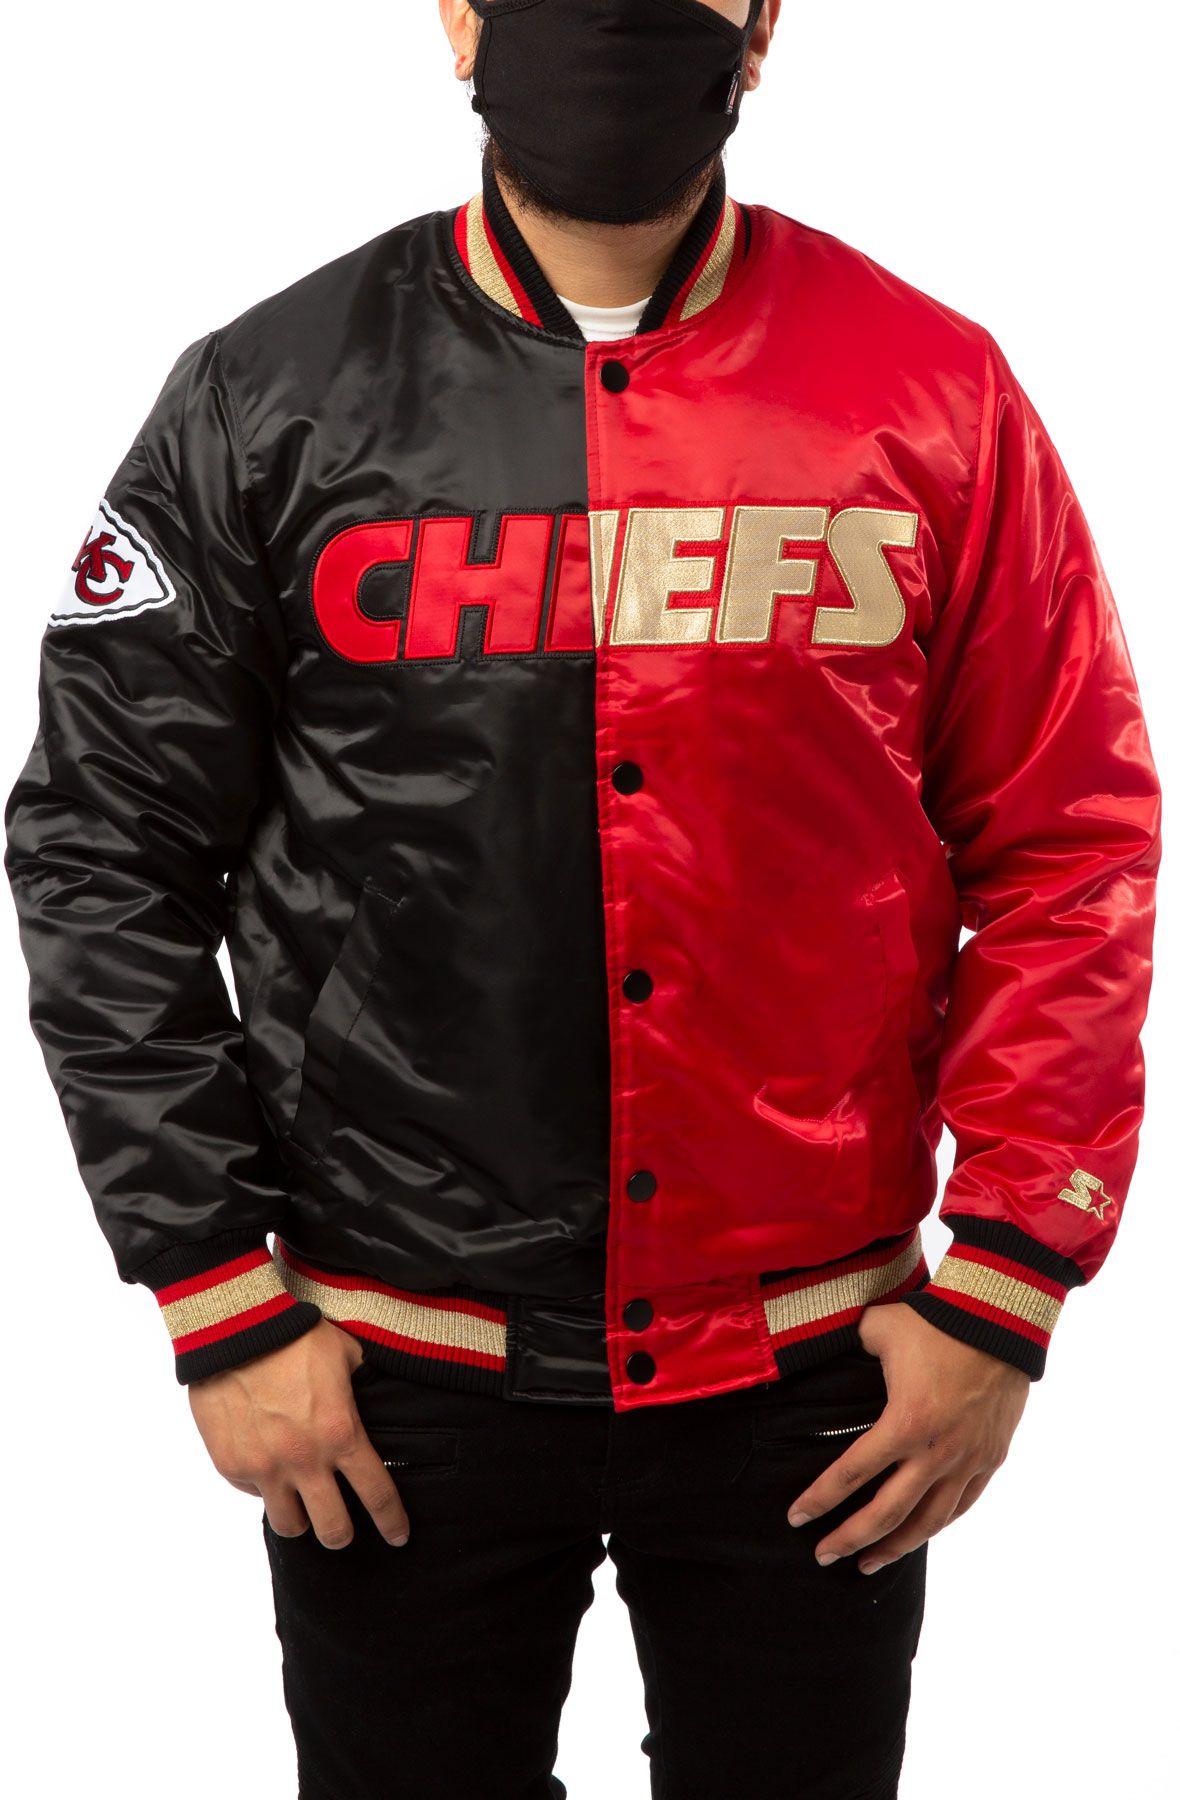 kansas city chiefs jacket - www.internetsociety.tg